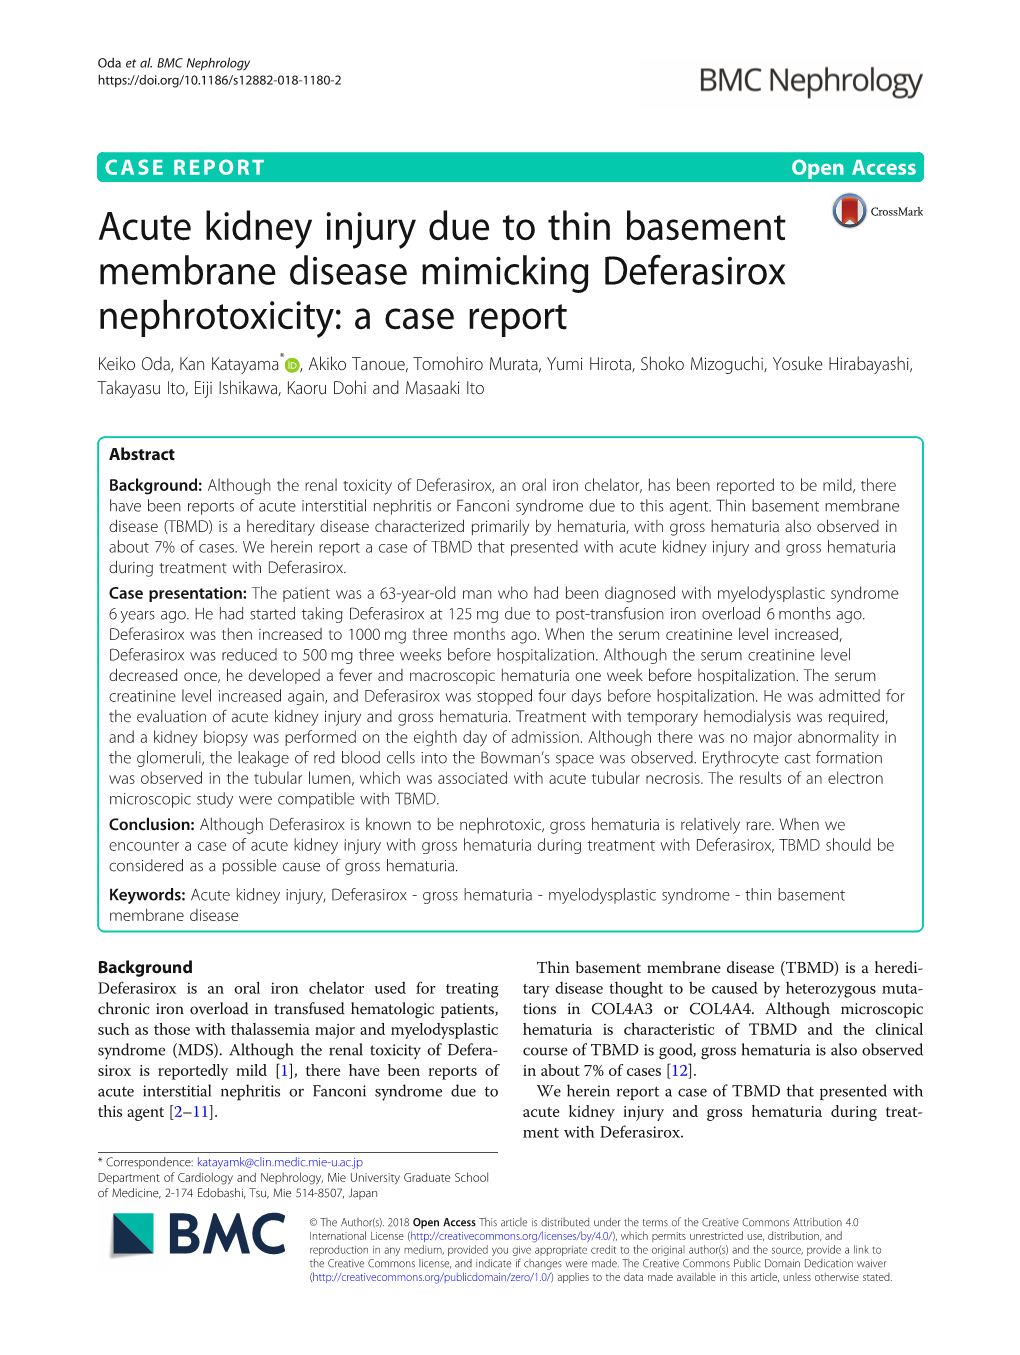 Acute Kidney Injury Due to Thin Basement Membrane Disease